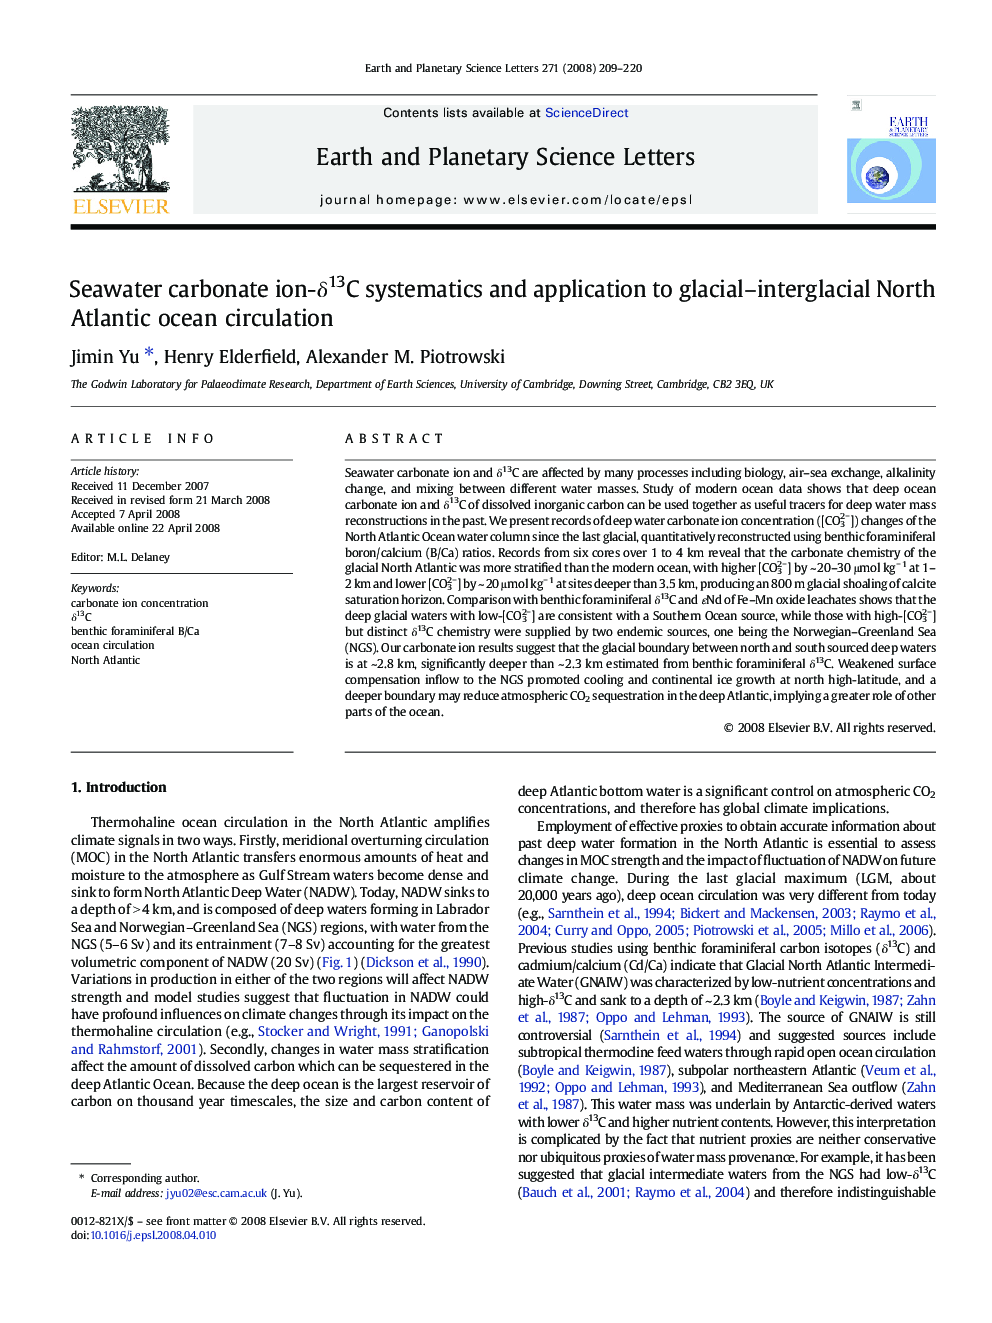 Seawater carbonate ion-δ13C systematics and application to glacial–interglacial North Atlantic ocean circulation